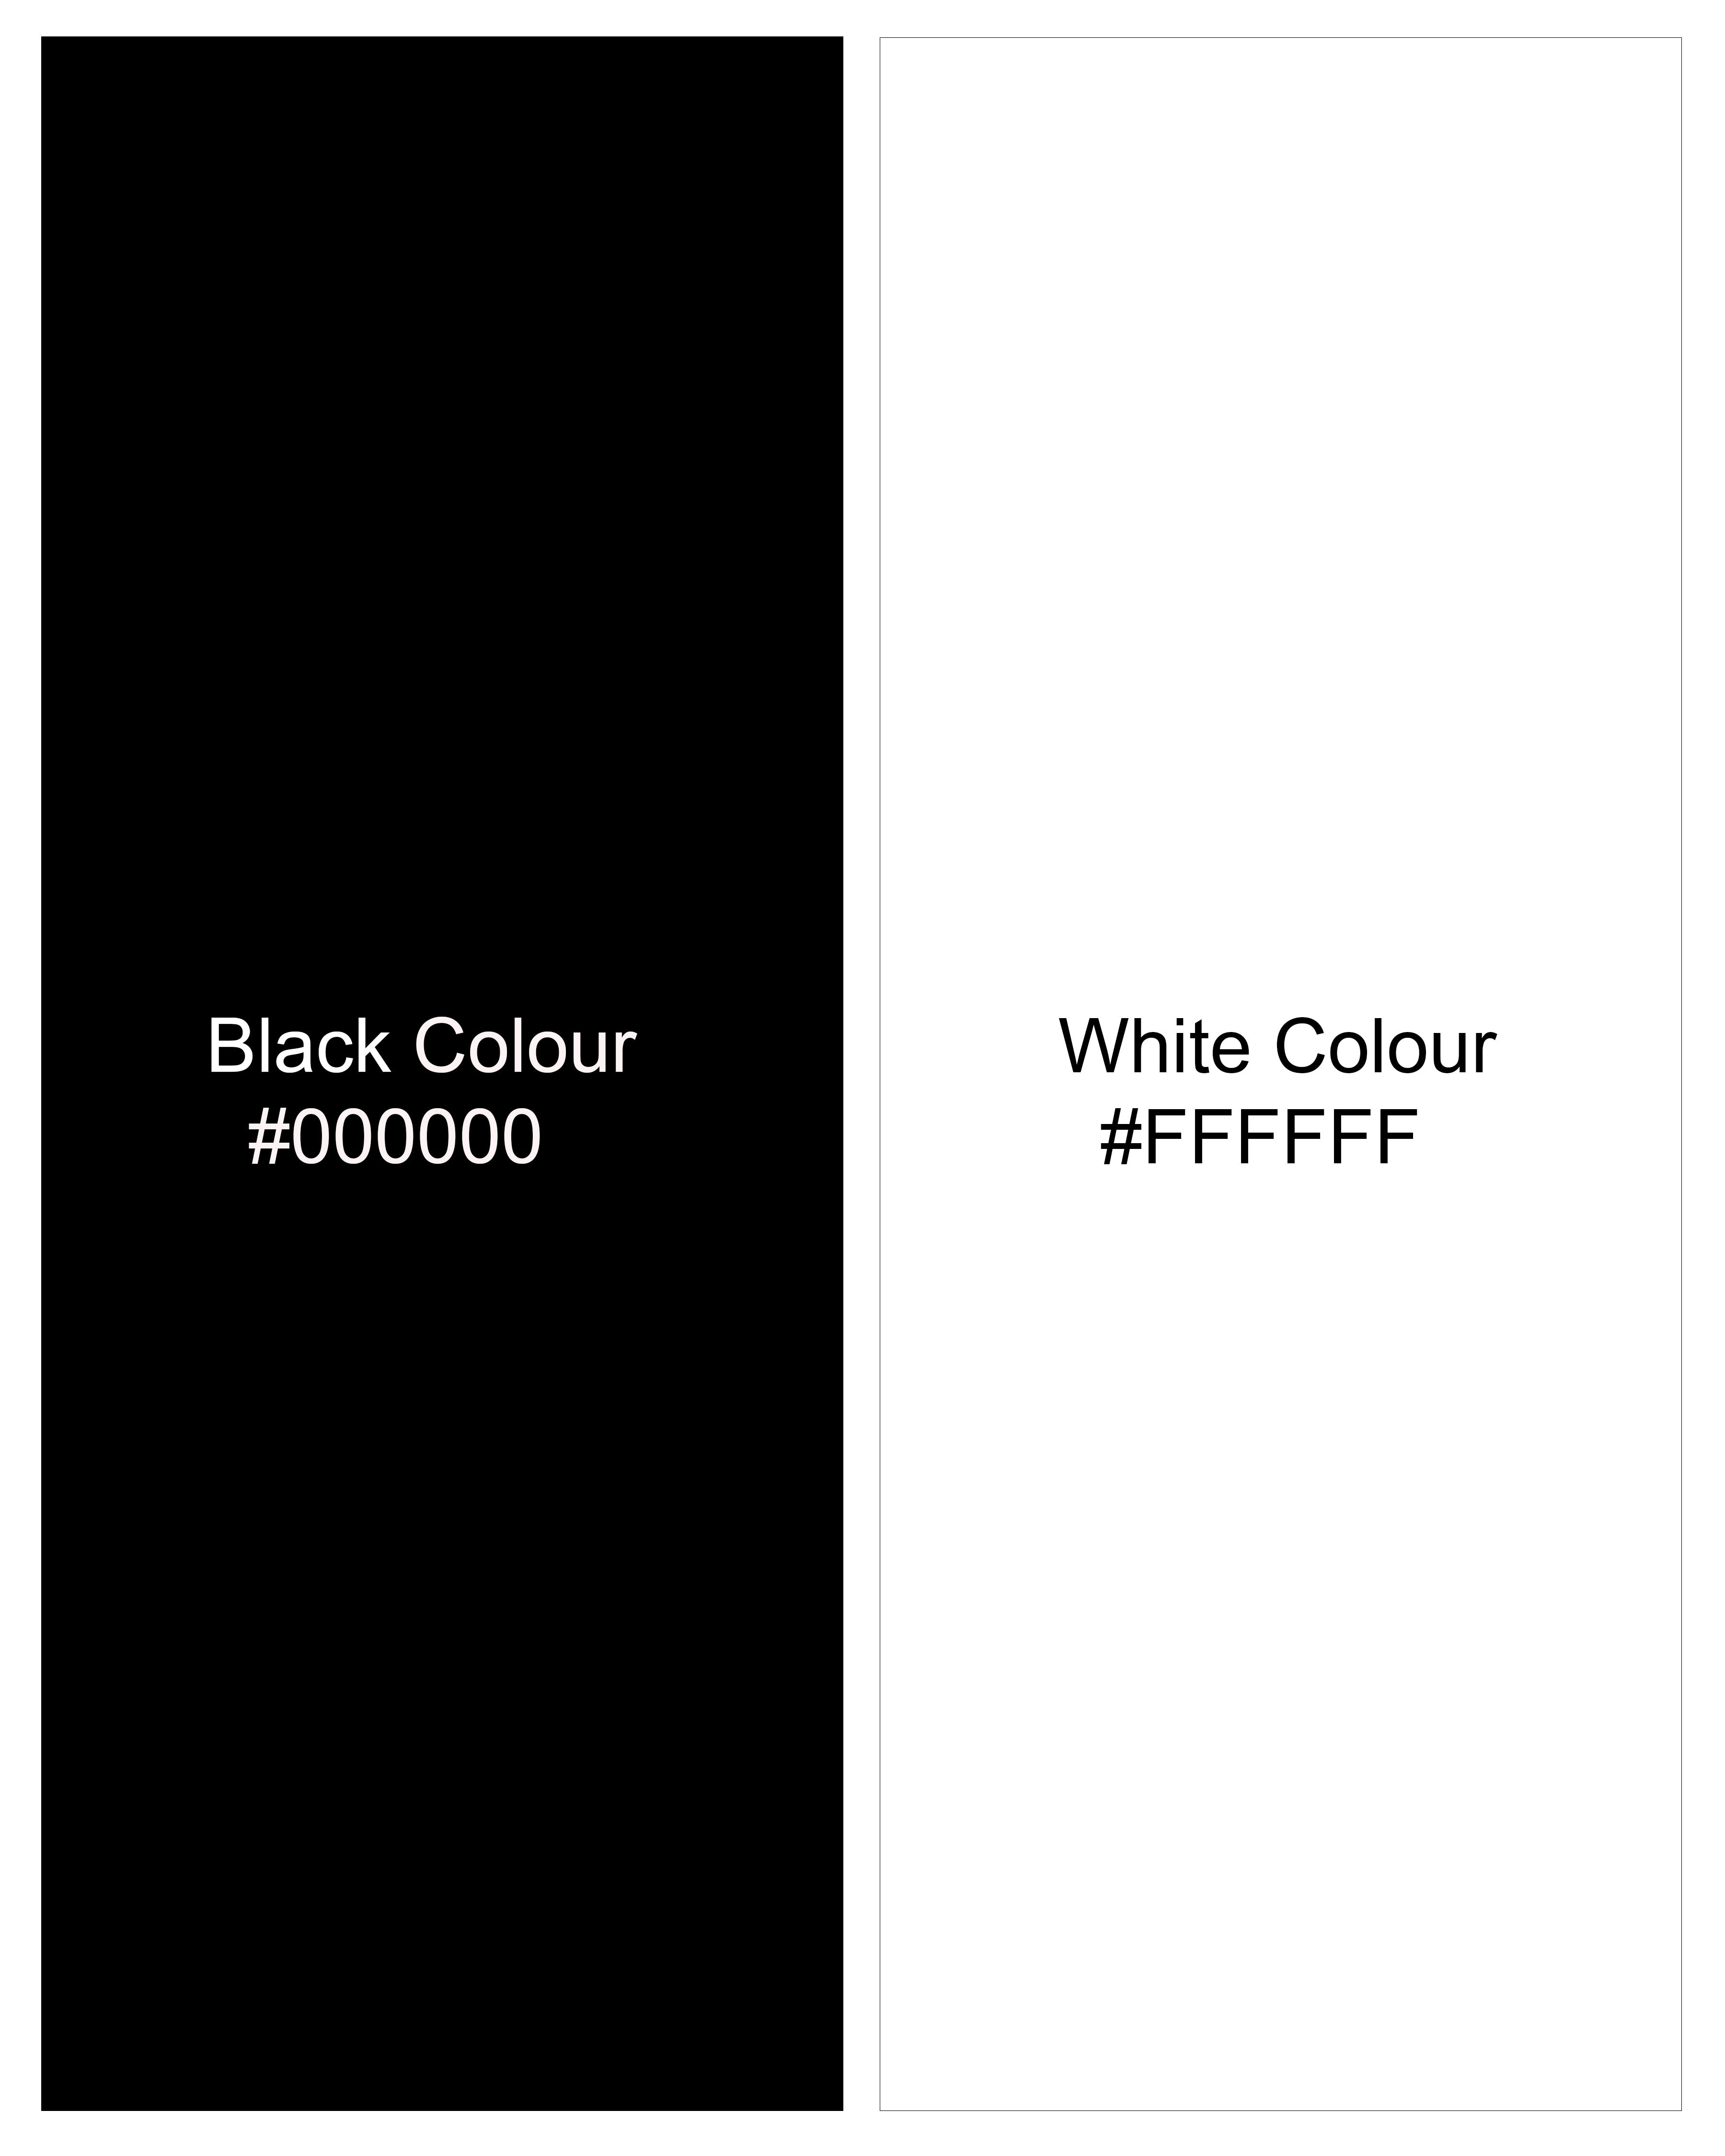 Jade Black and White Plaid Flannel Designer Shirt with Zipper Closure 9251-ZP-38,9251-ZP-H-38,9251-ZP-39,9251-ZP-H-39,9251-ZP-40,9251-ZP-H-40,9251-ZP-42,9251-ZP-H-42,9251-ZP-44,9251-ZP-H-44,9251-ZP-46,9251-ZP-H-46,9251-ZP-48,9251-ZP-H-48,9251-ZP-50,9251-ZP-H-50,9251-ZP-52,9251-ZP-H-52